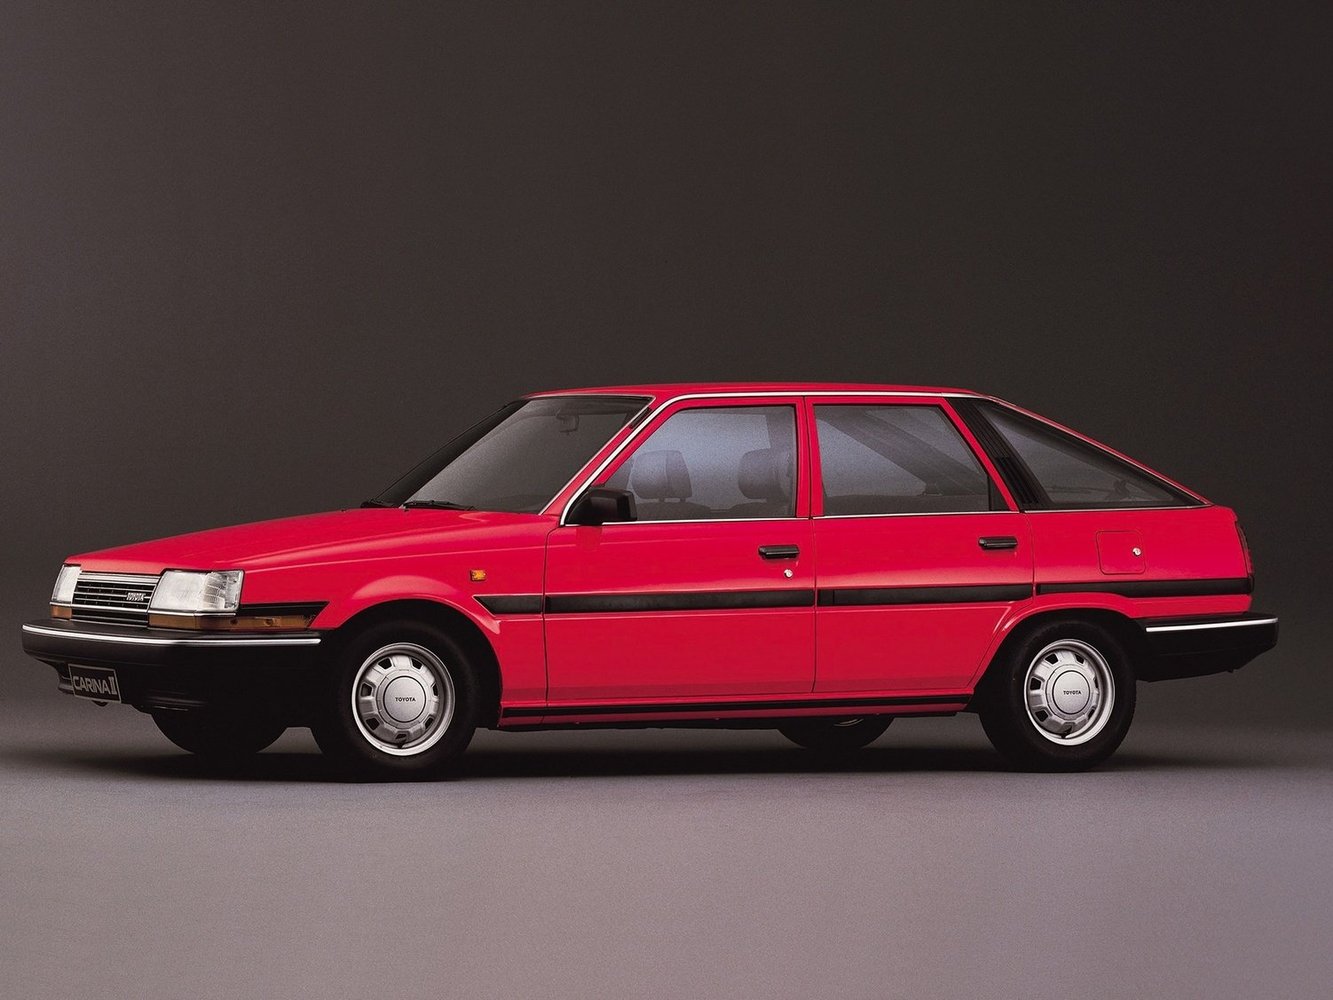 Toyota Carina 1983 - 1988